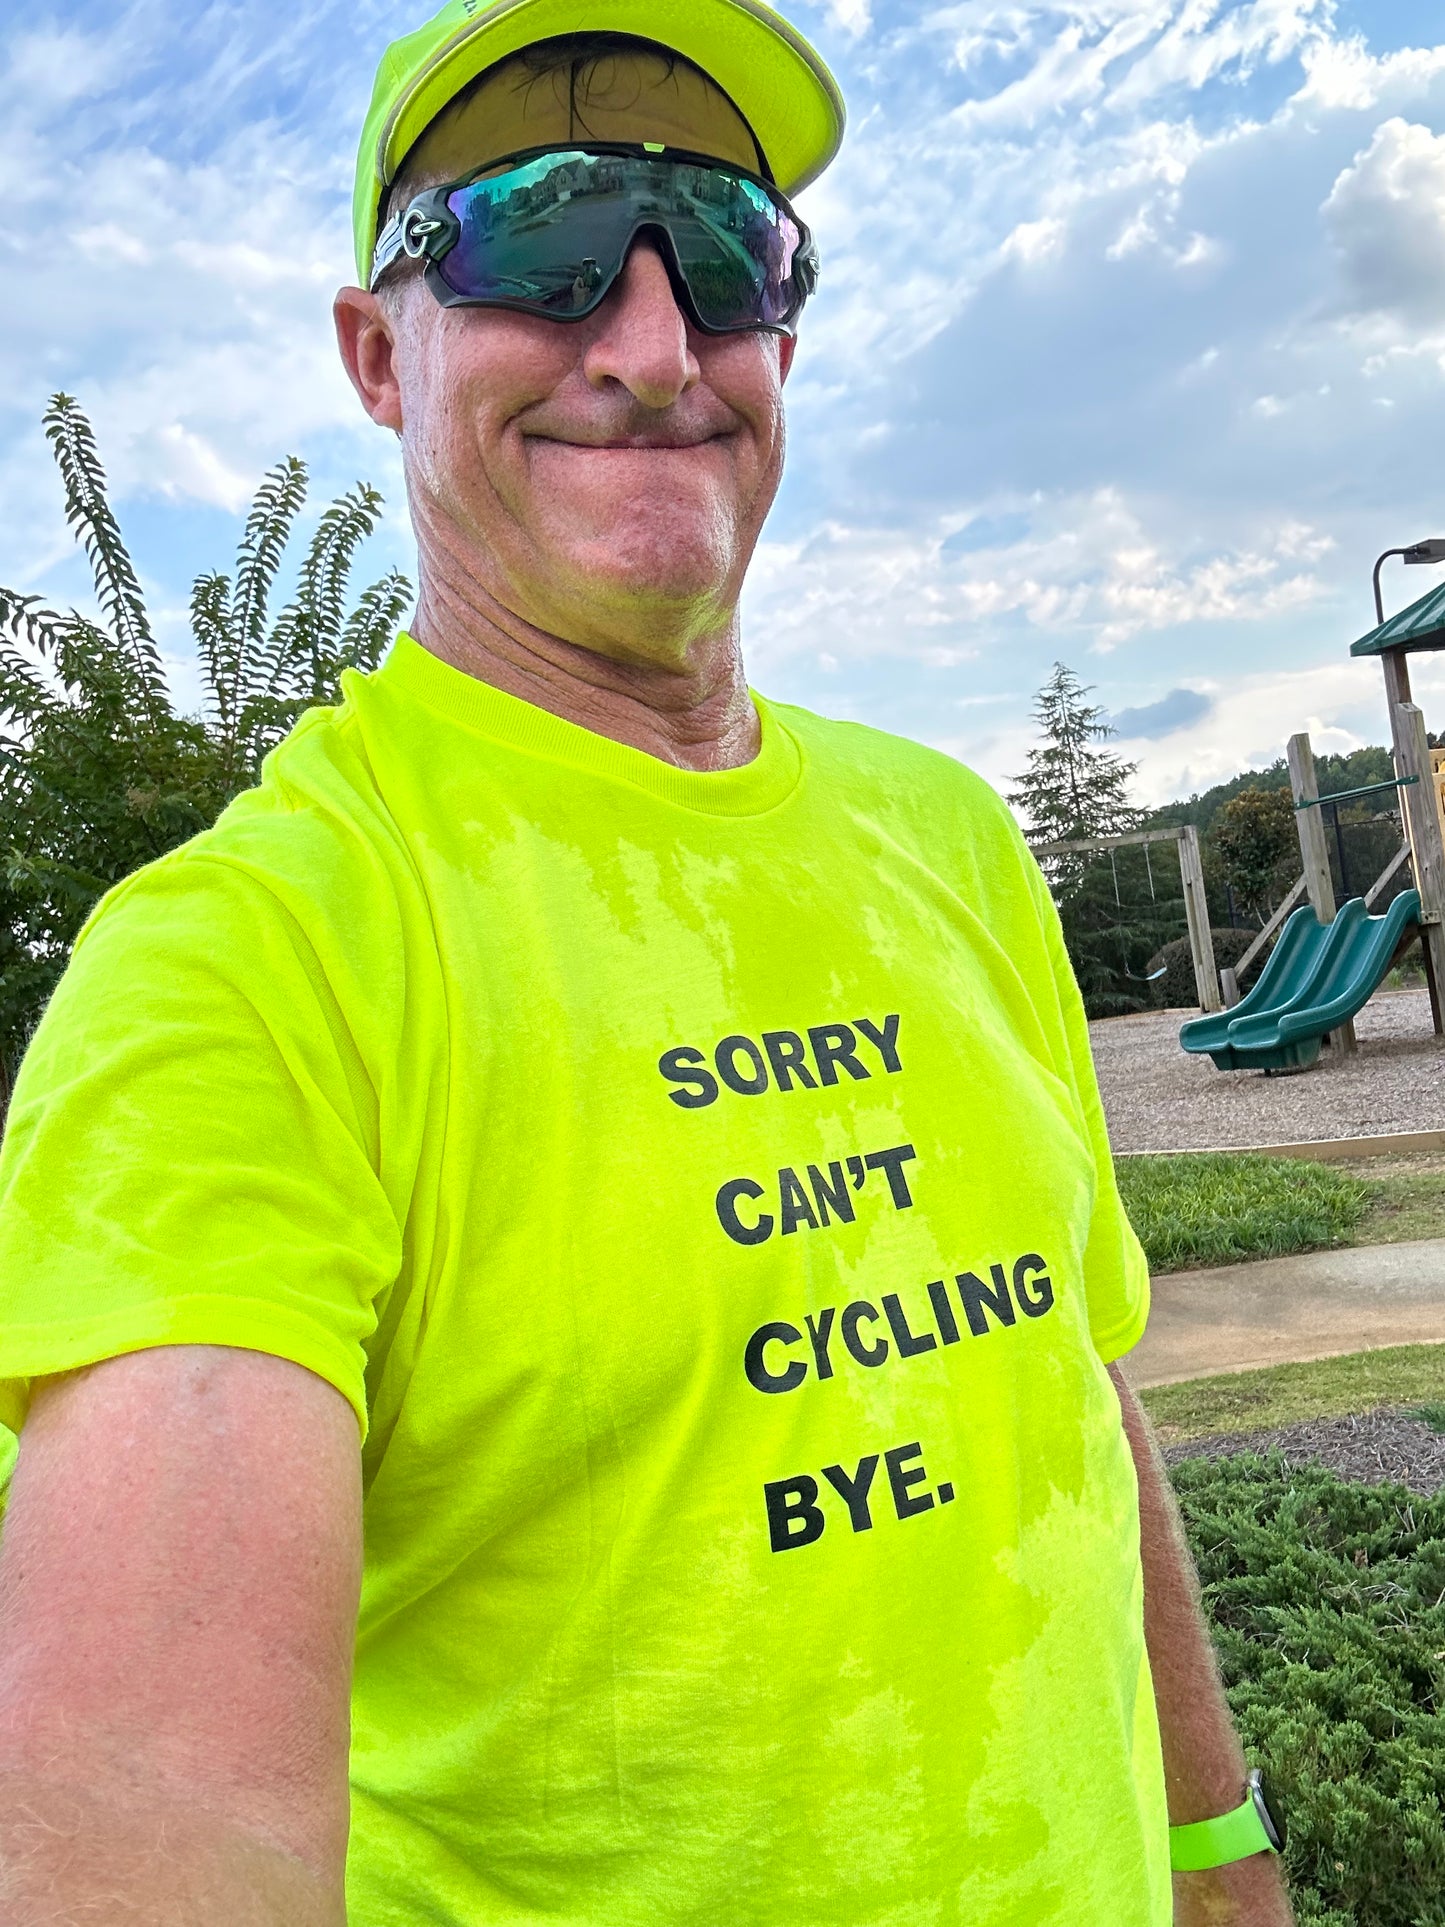 (Copy) Sorry/Can’t/Cycling/BYE. T-shirt